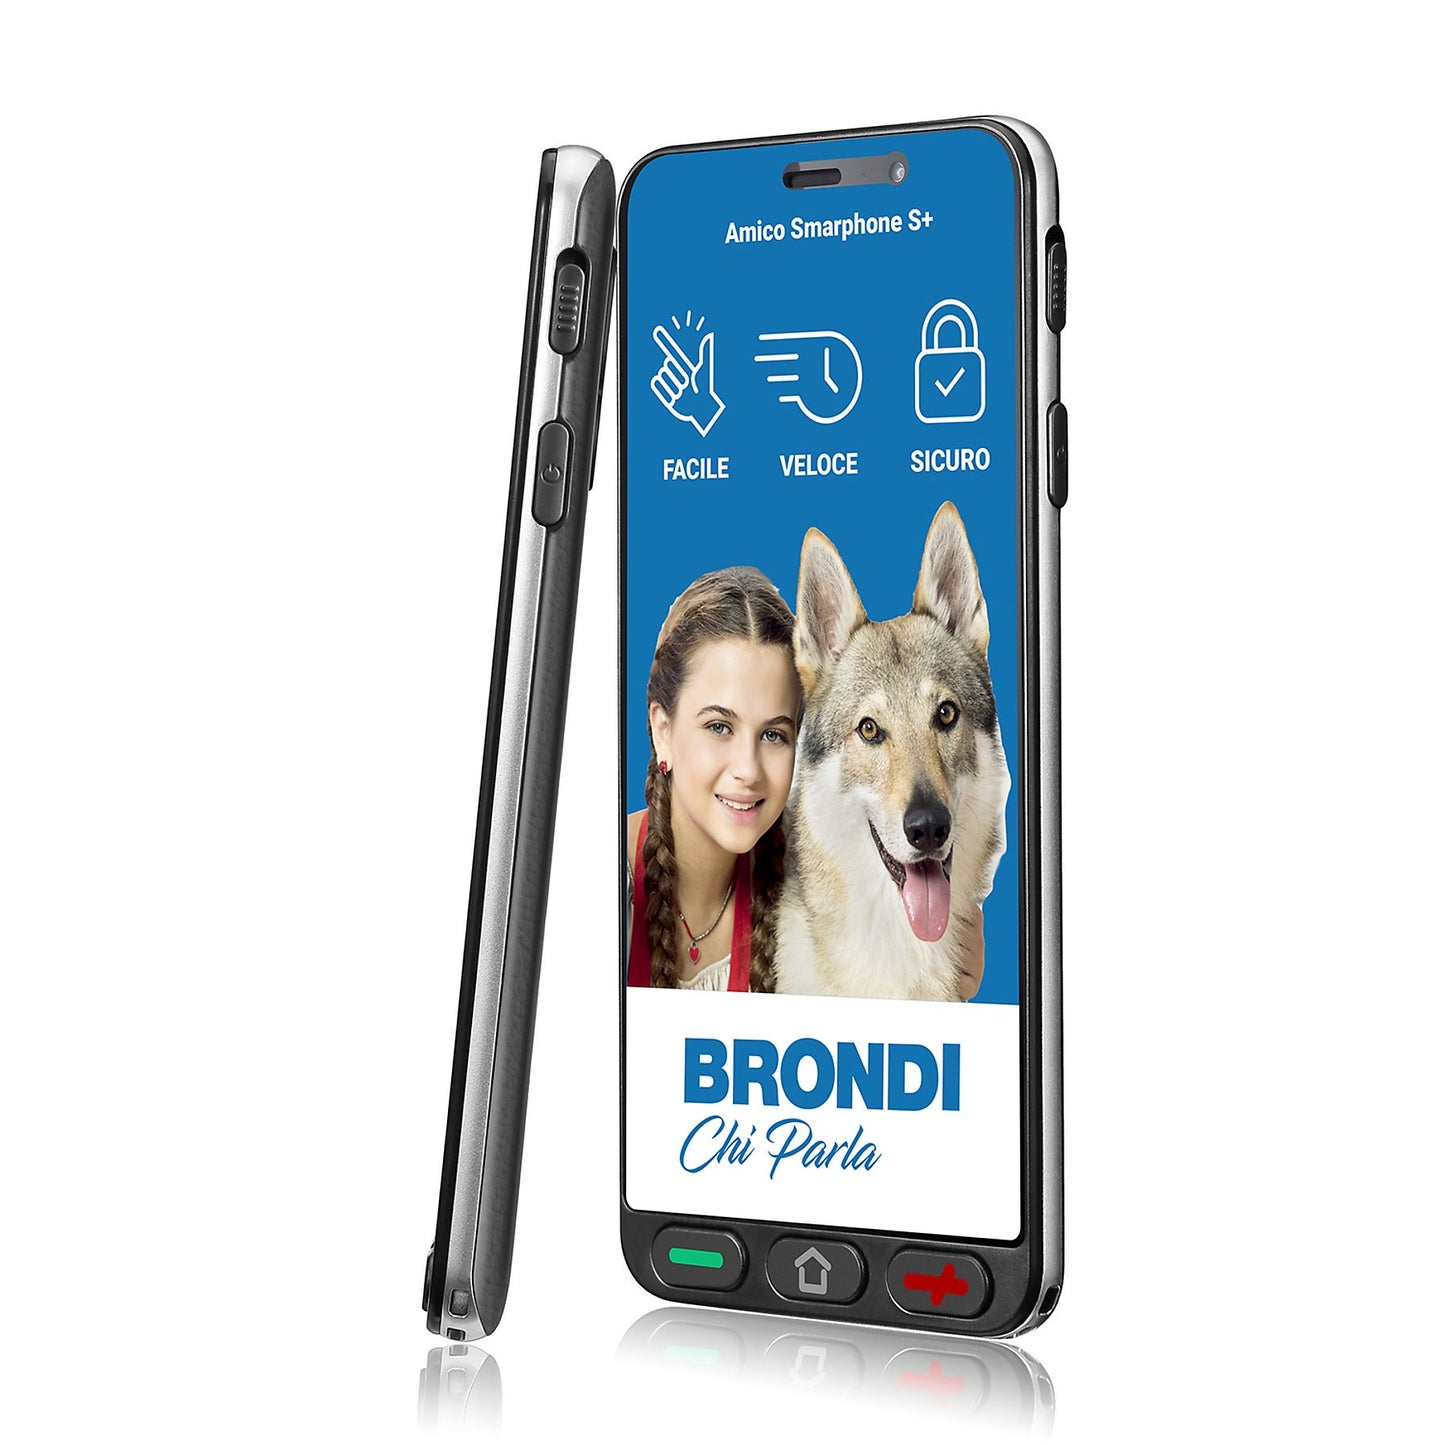 Brondi Amico smartphone S+